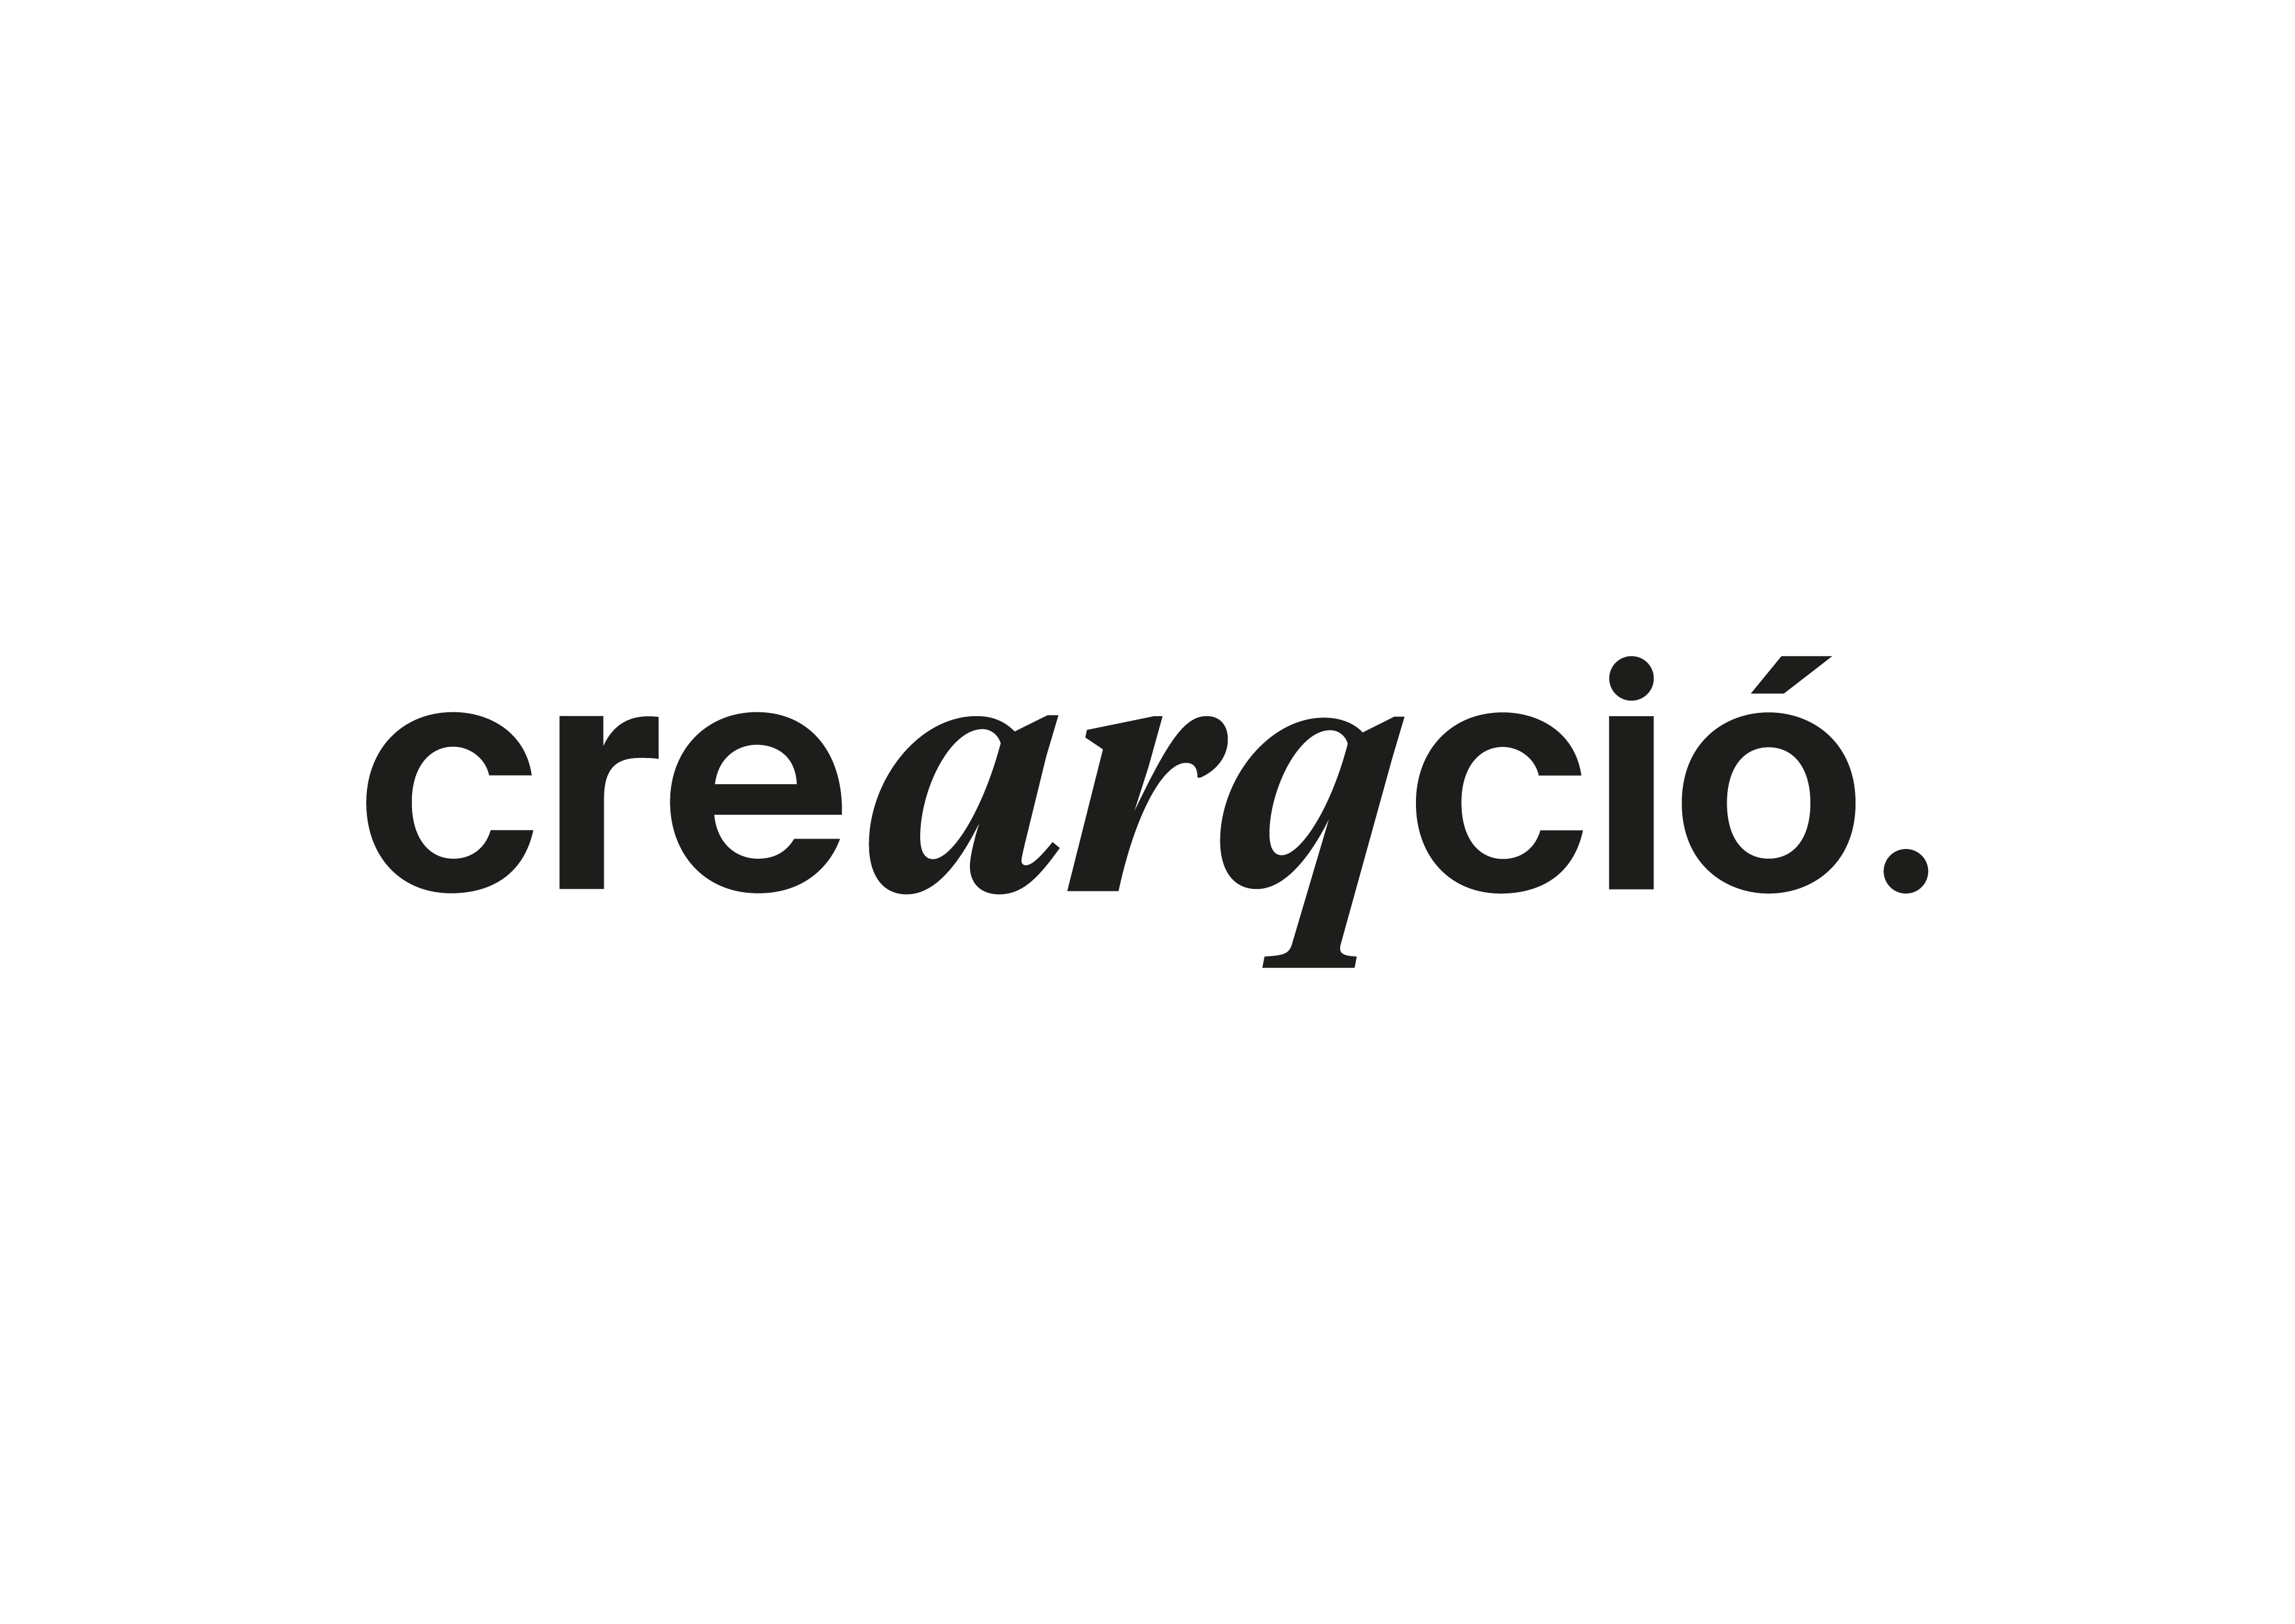 (c) Crearqcio.com